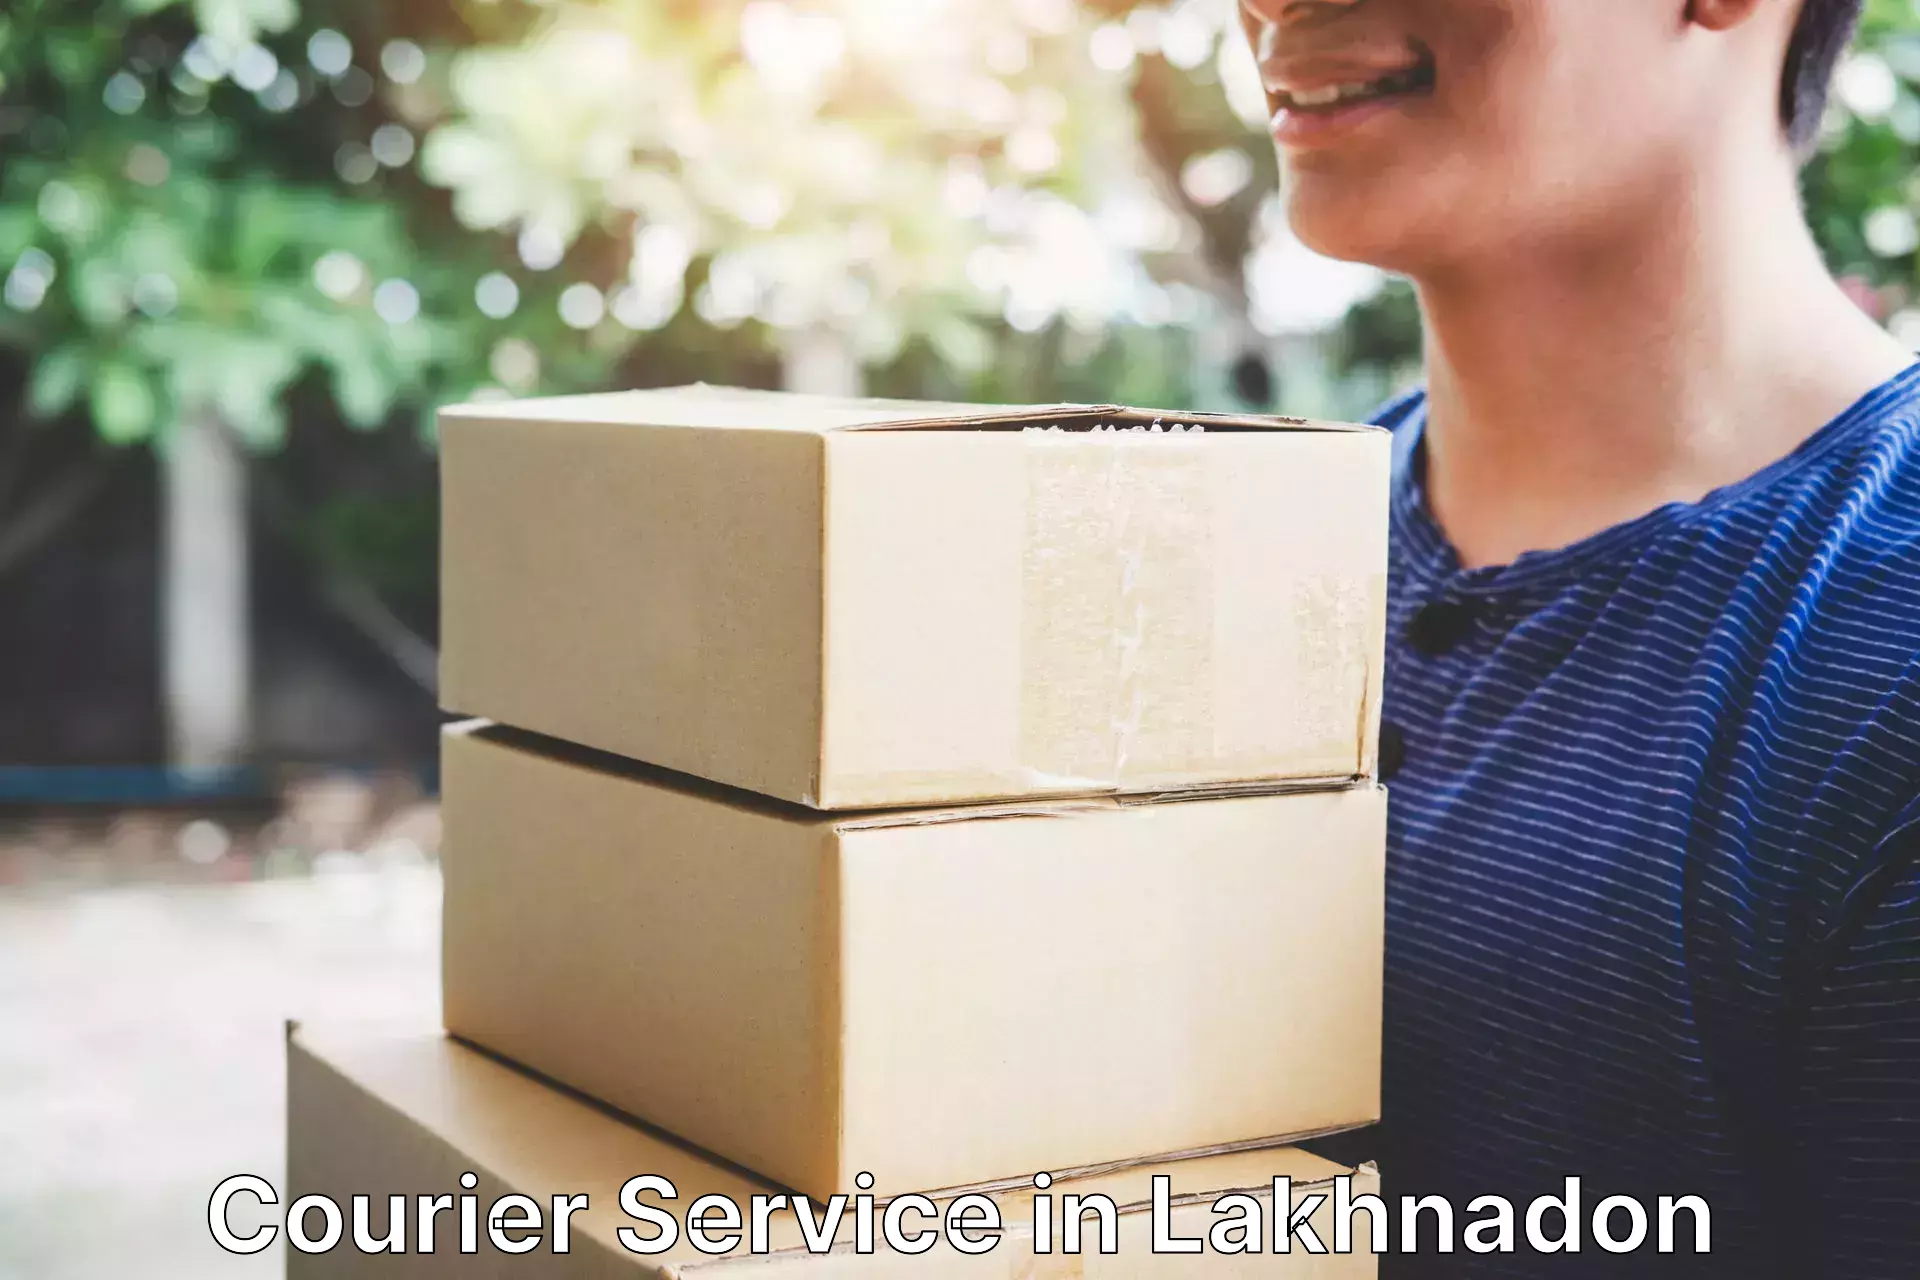 Round-the-clock parcel delivery in Lakhnadon